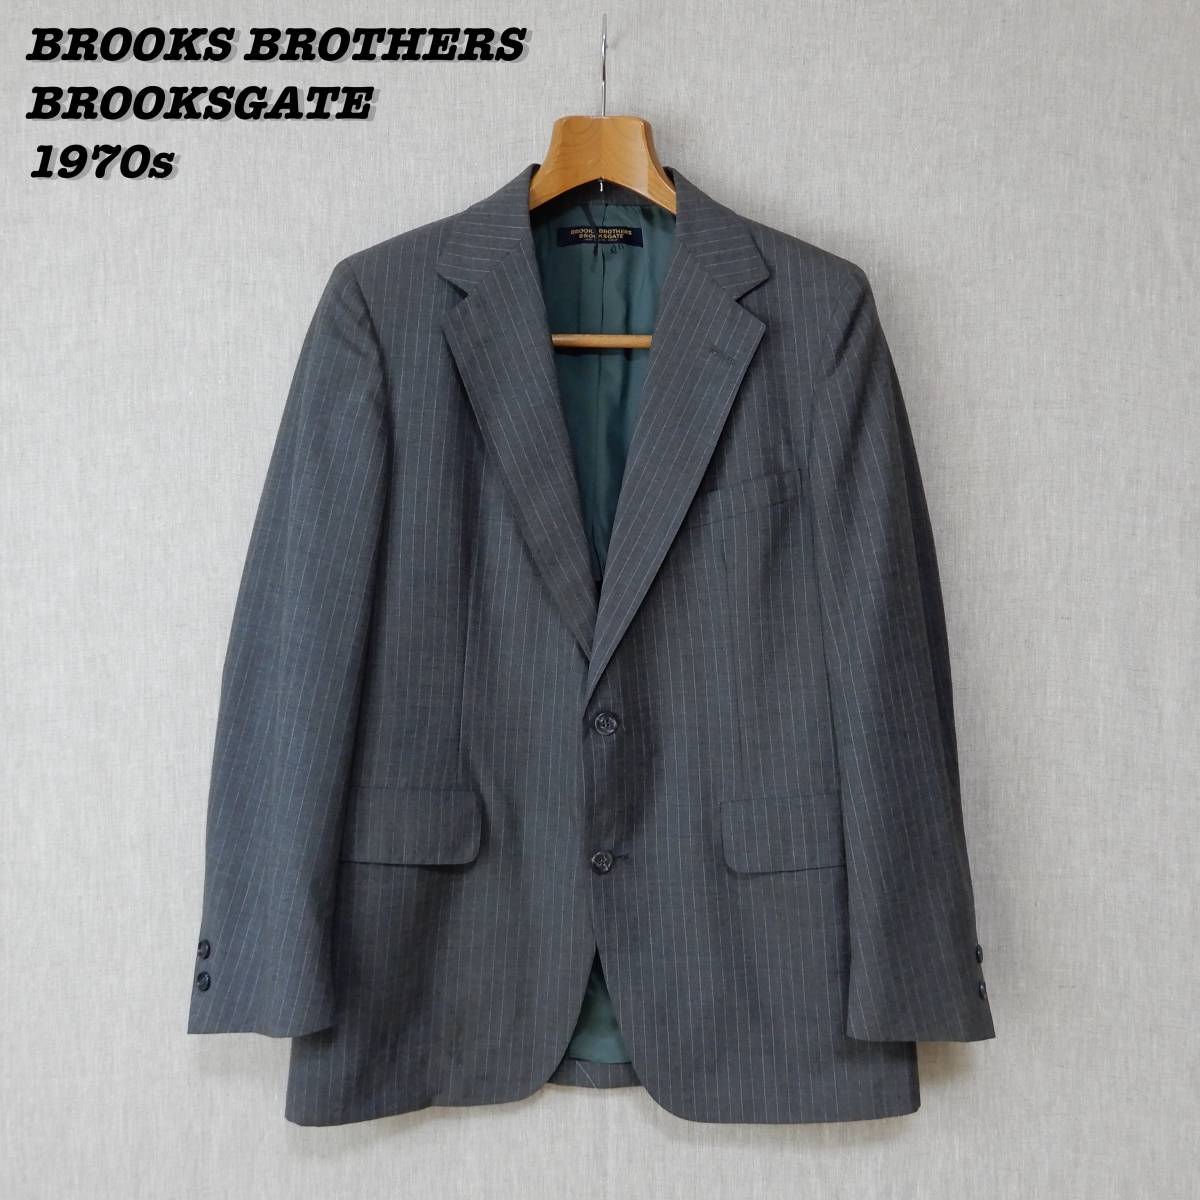 BROOKS BROTHERS BROOKSGATE SINGLE 2BUTTON JACKET 1970s Vintage ブルックスブラザーズ ブルックスゲート テーラードジャケット